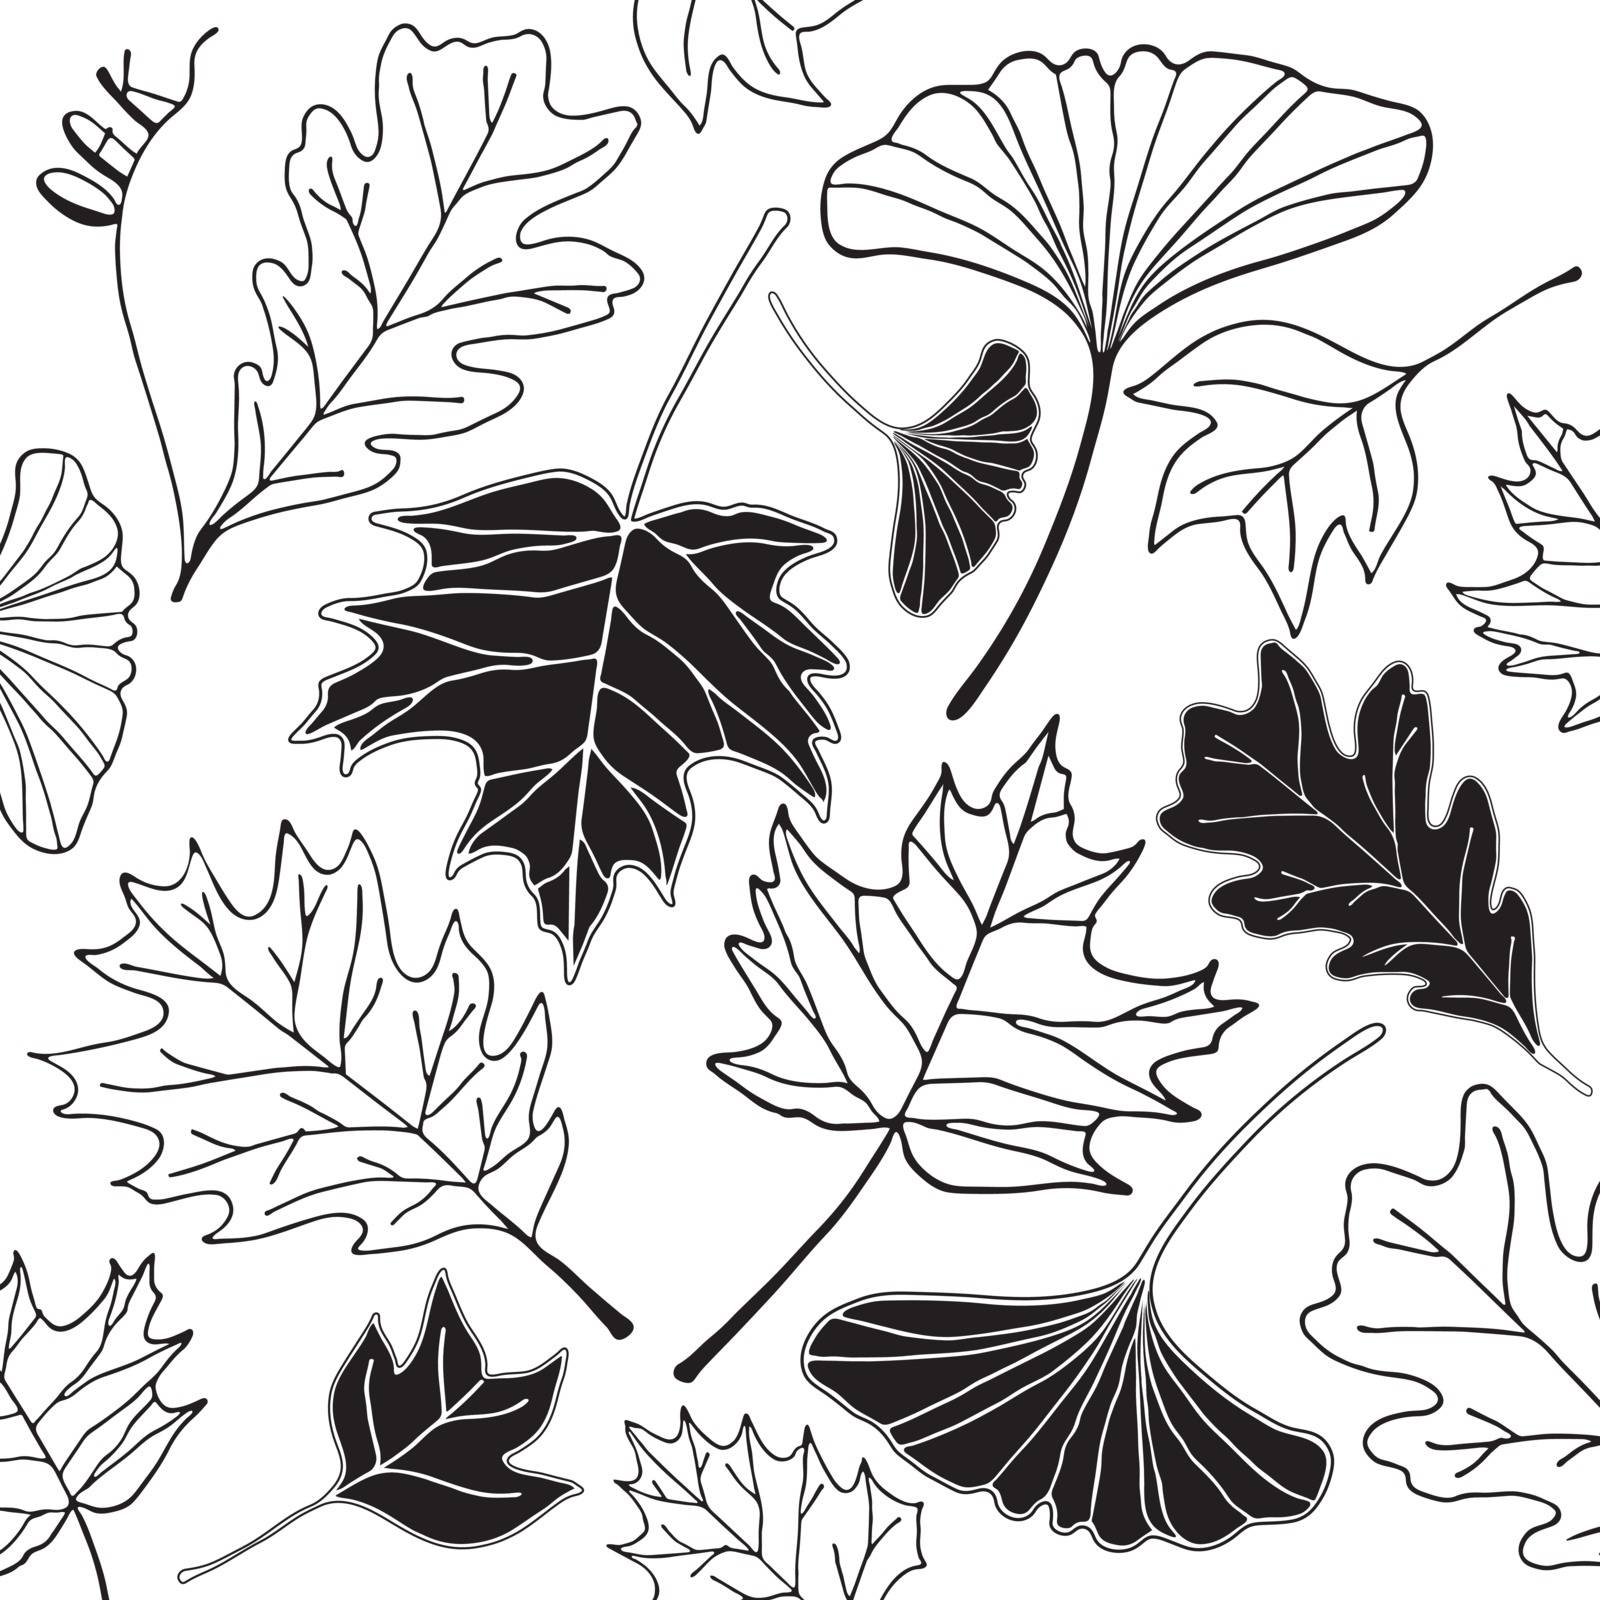 autumn leaf hand drawn doodle illustration black line on white background